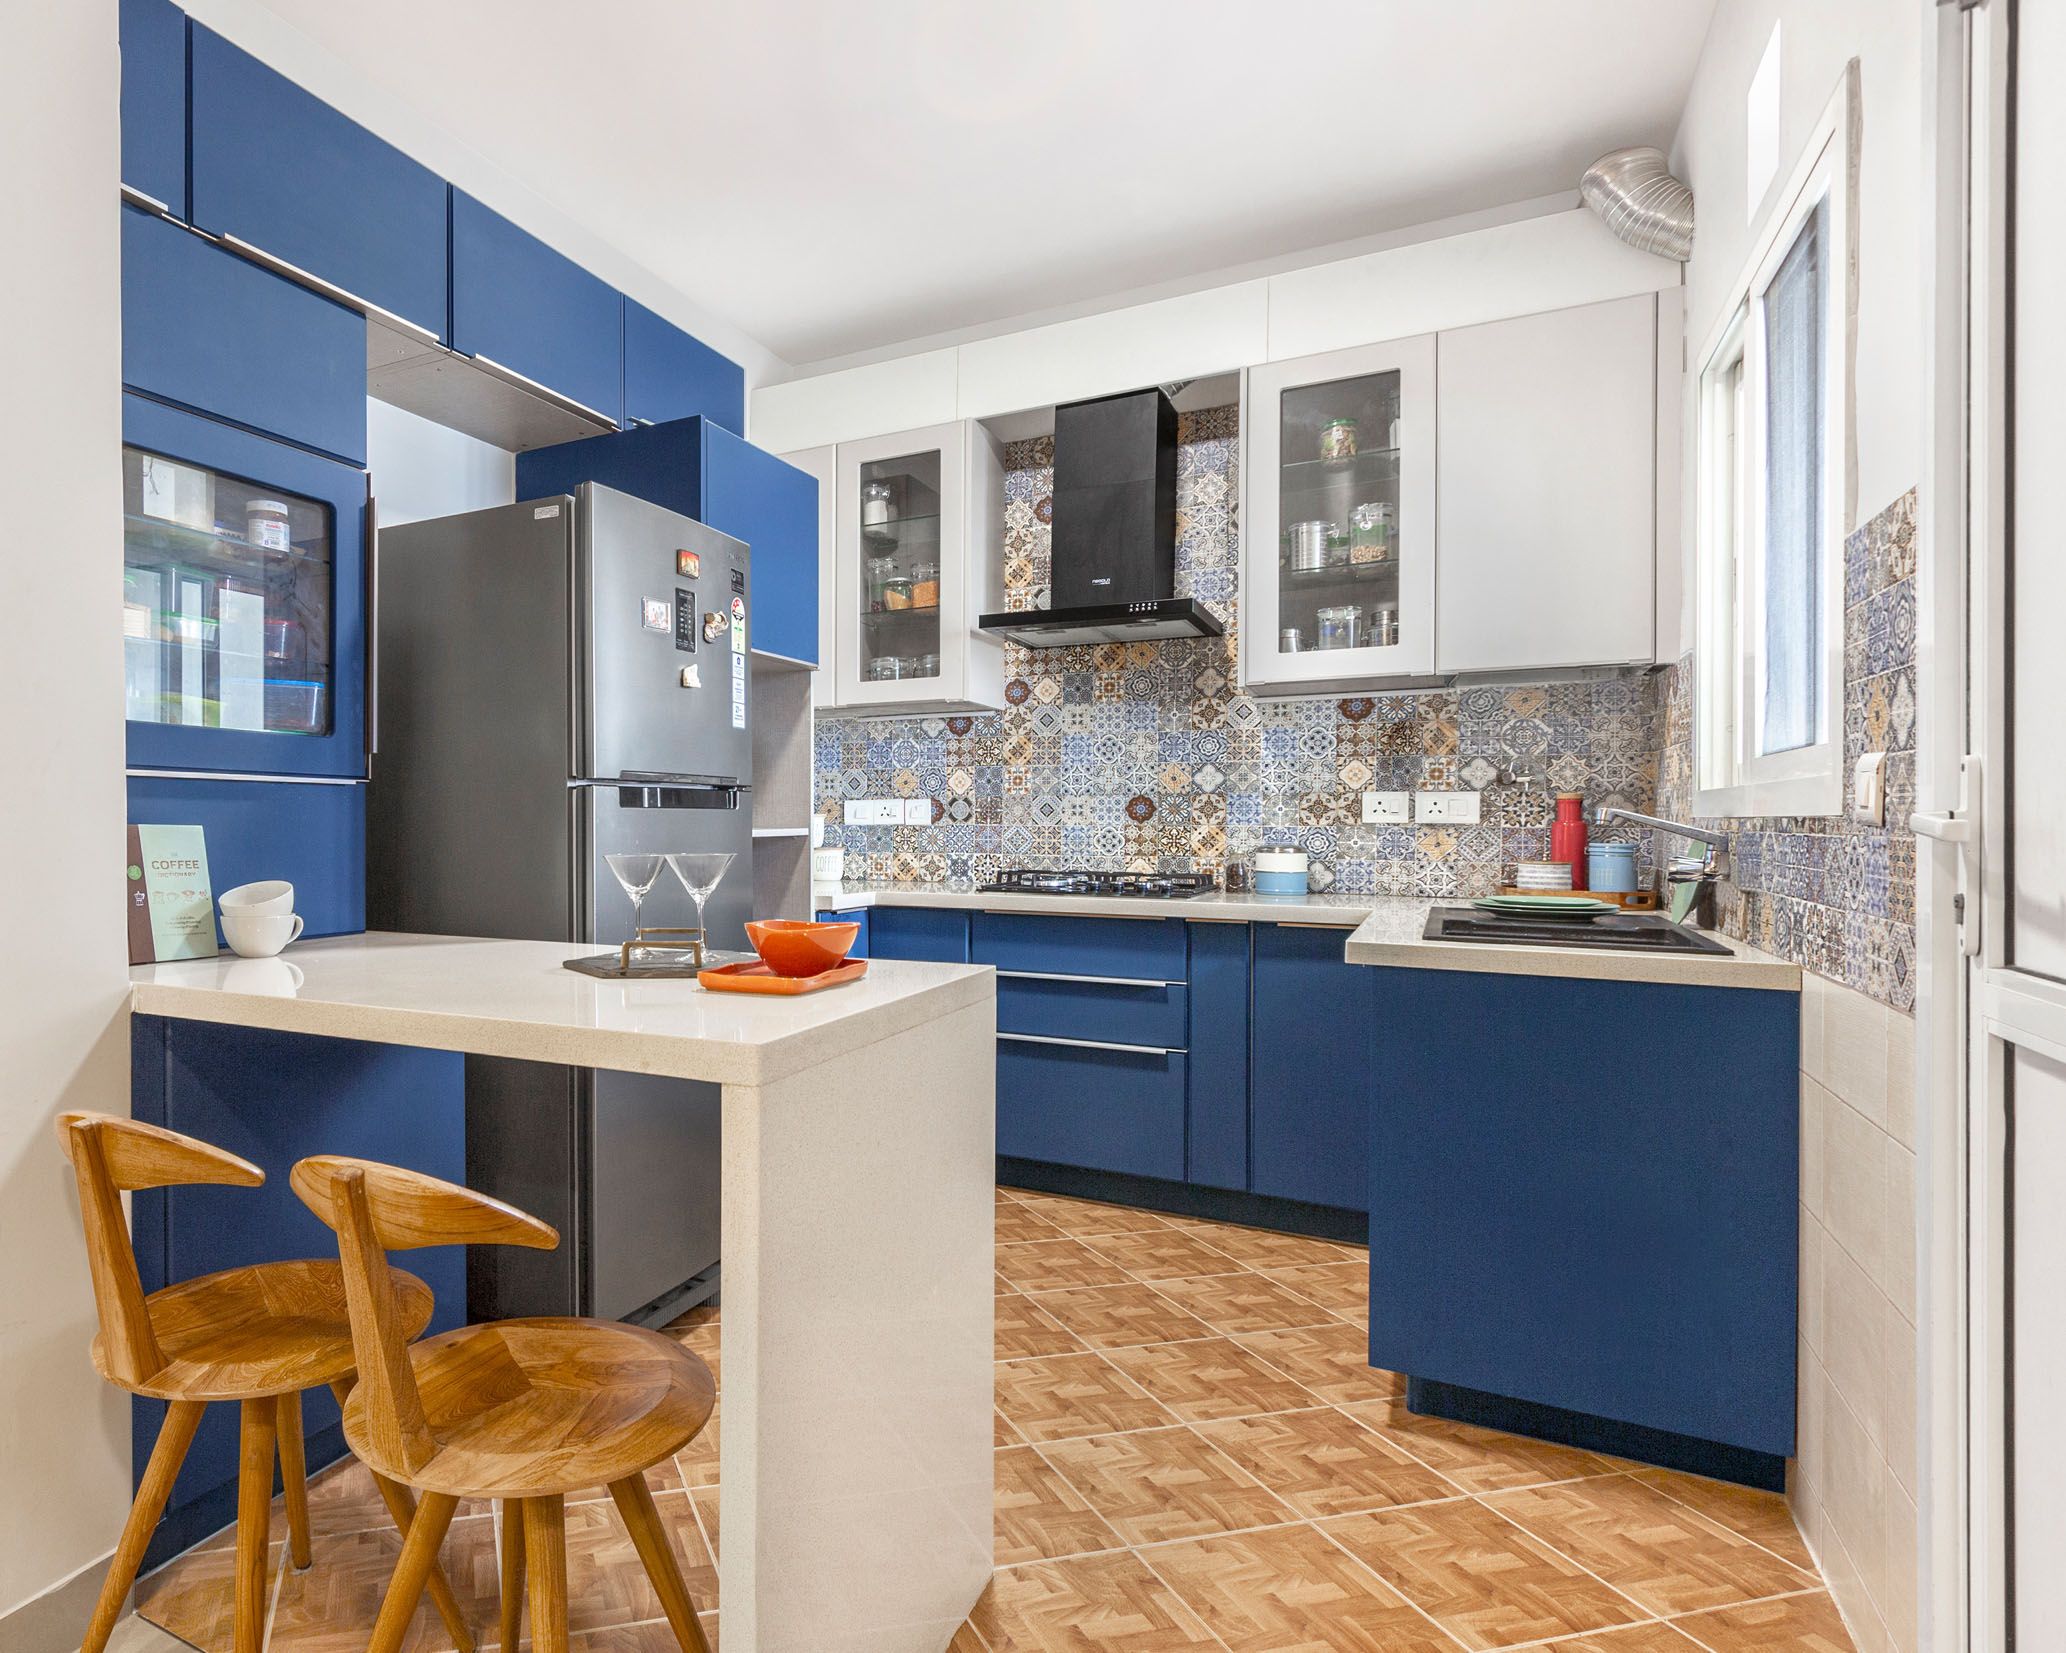 Tropical Blue And White Modular Island Kitchen Design With Patterned Backsplash